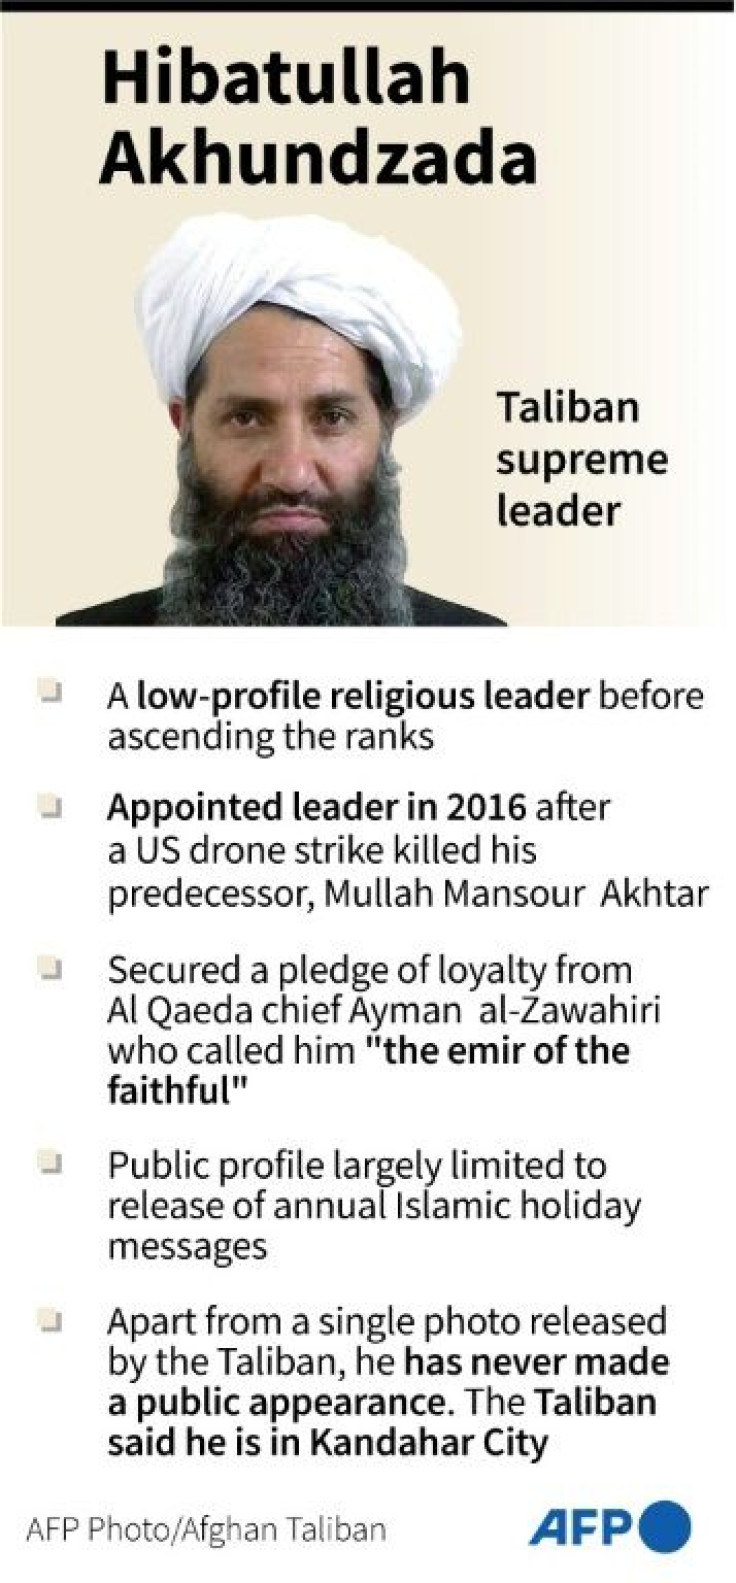 Profile of Hibatullah Akhundzada, supreme leader of the Taliban movement